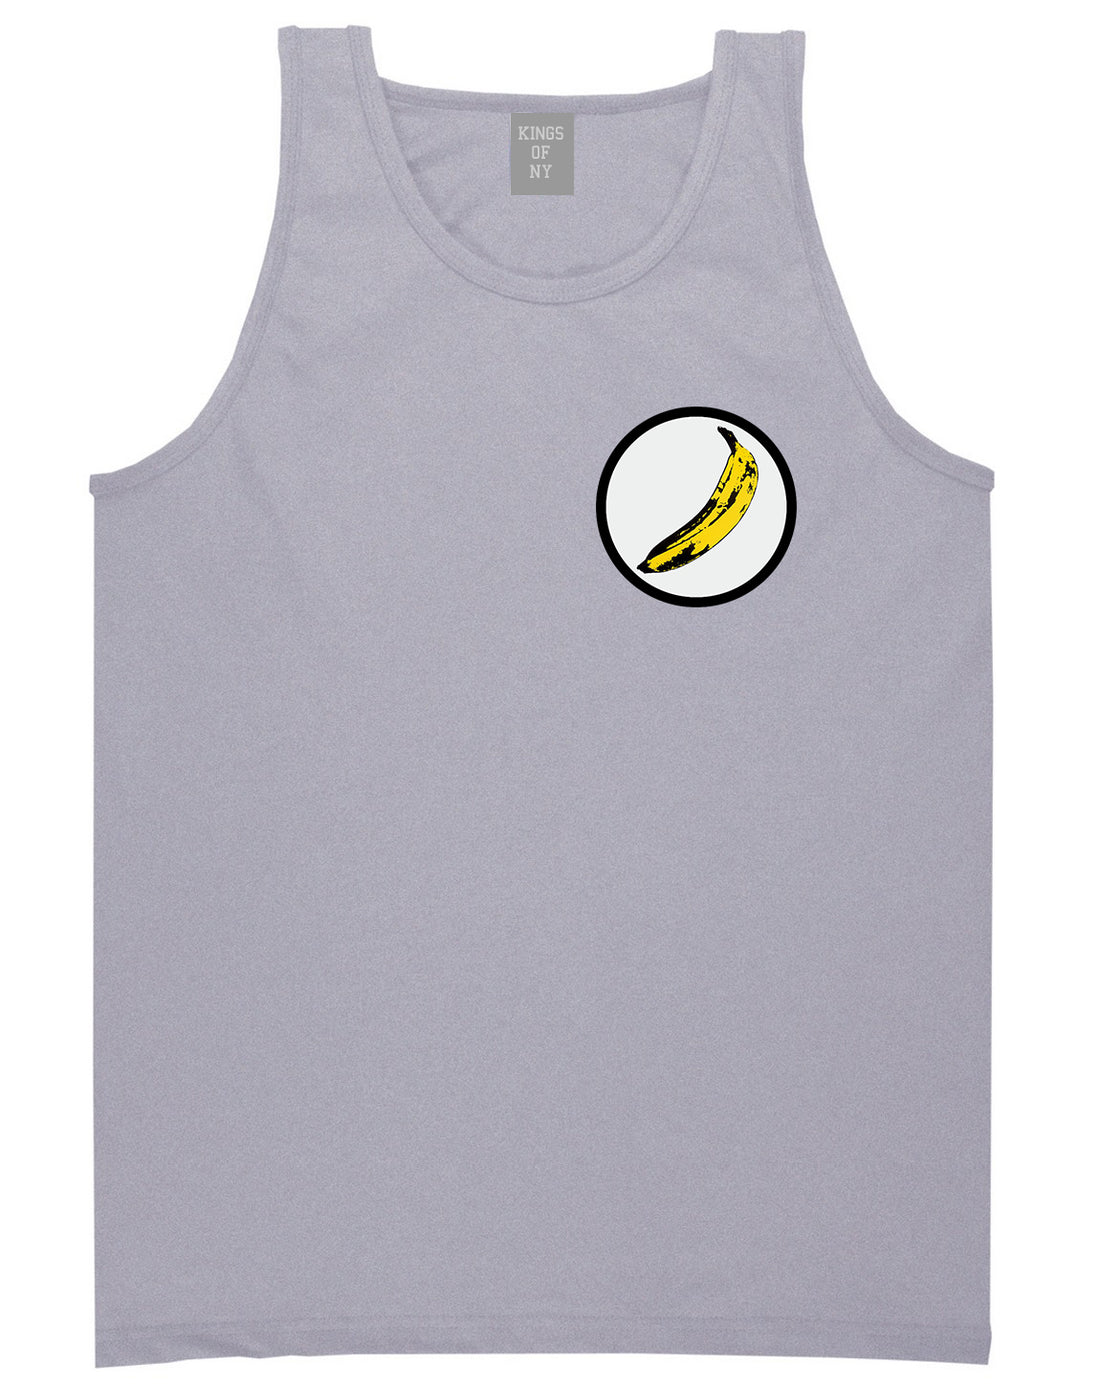 Banana Chest Grey Tank Top Shirt by Kings Of NY